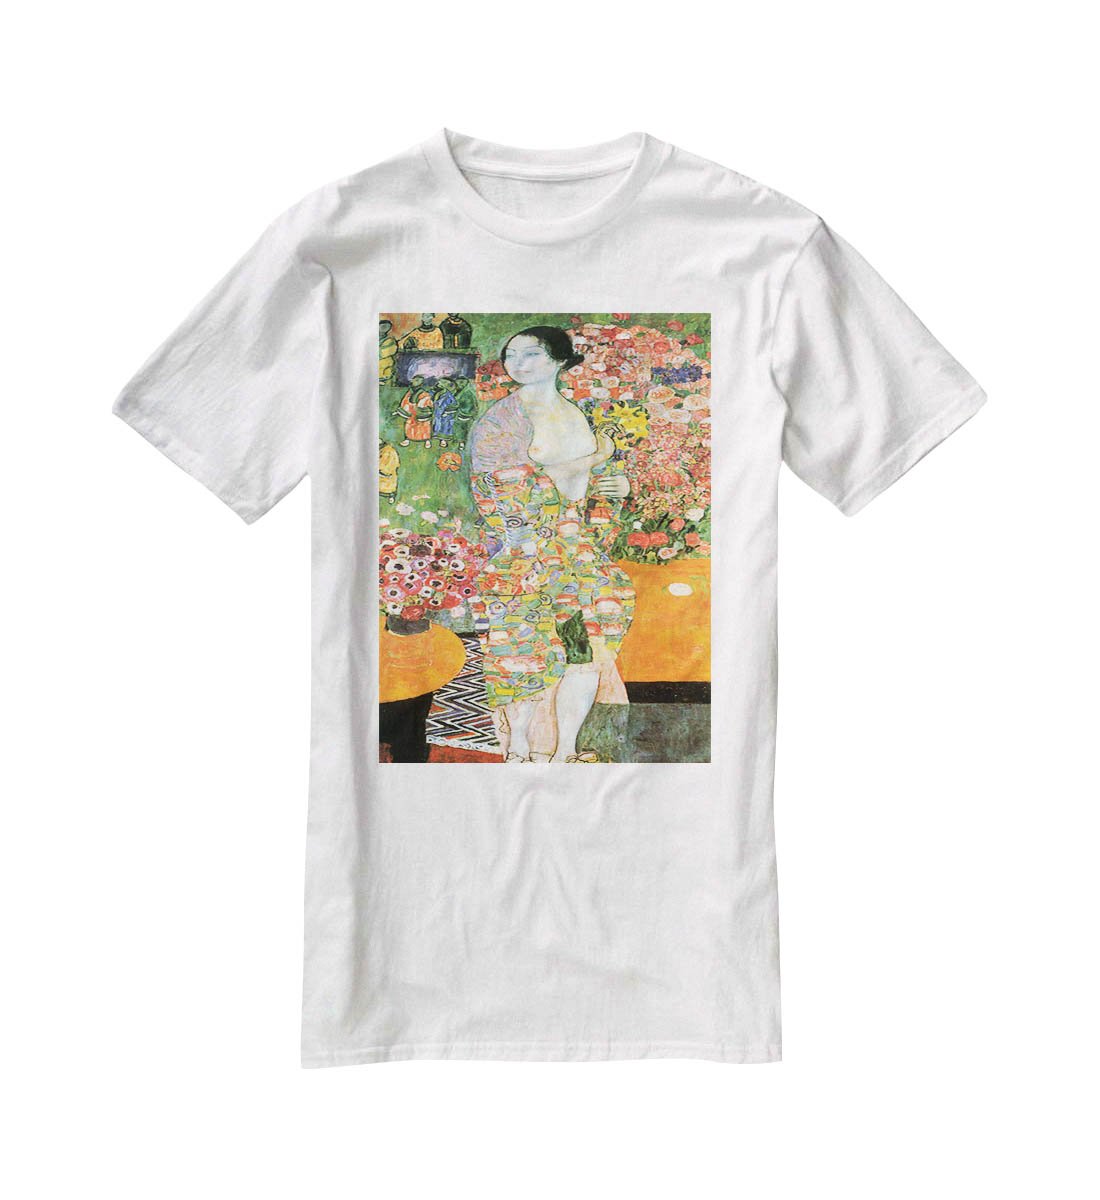 The dancer by Klimt T-Shirt - Canvas Art Rocks - 5